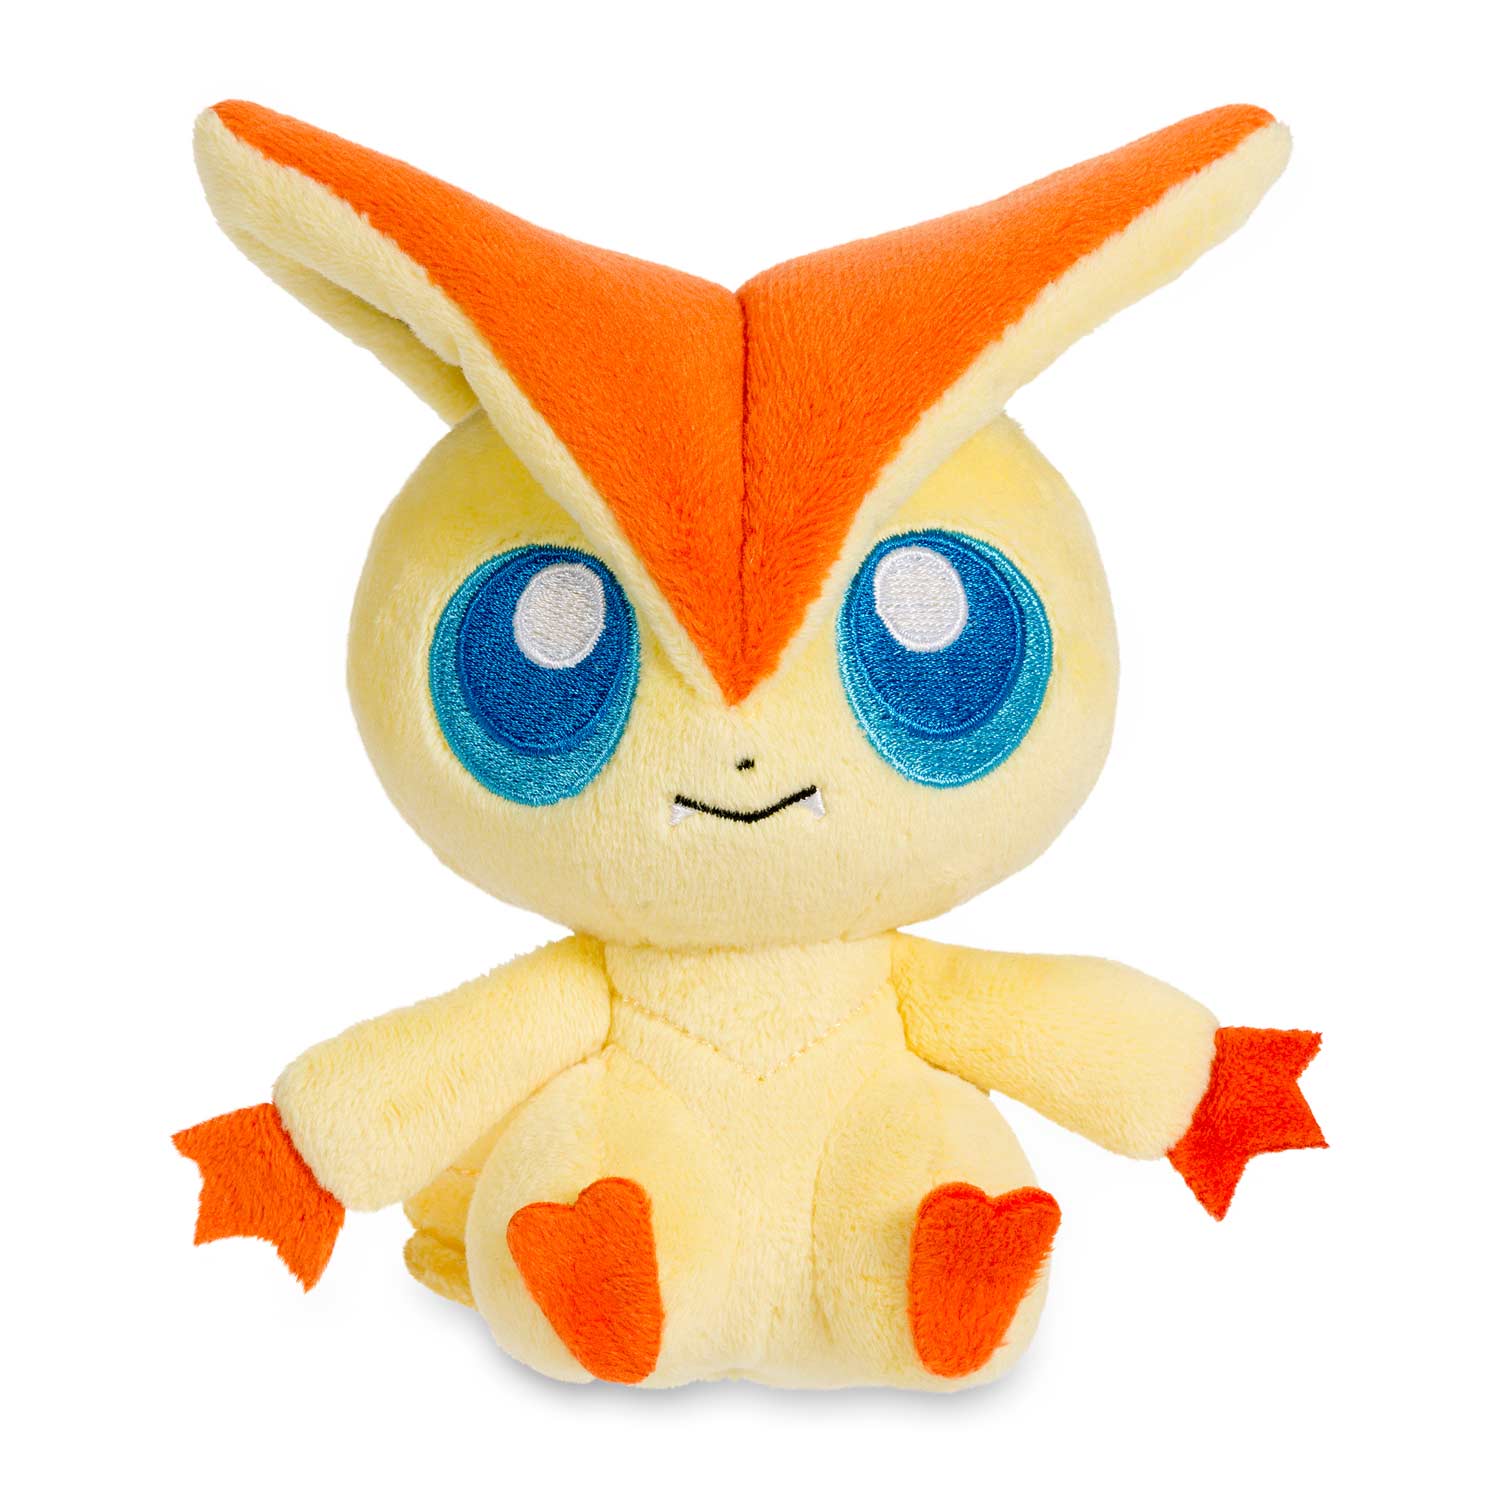 Need a Legendary Pokemon Plush Toy: Get the Adorable Victini Plush on Amazon